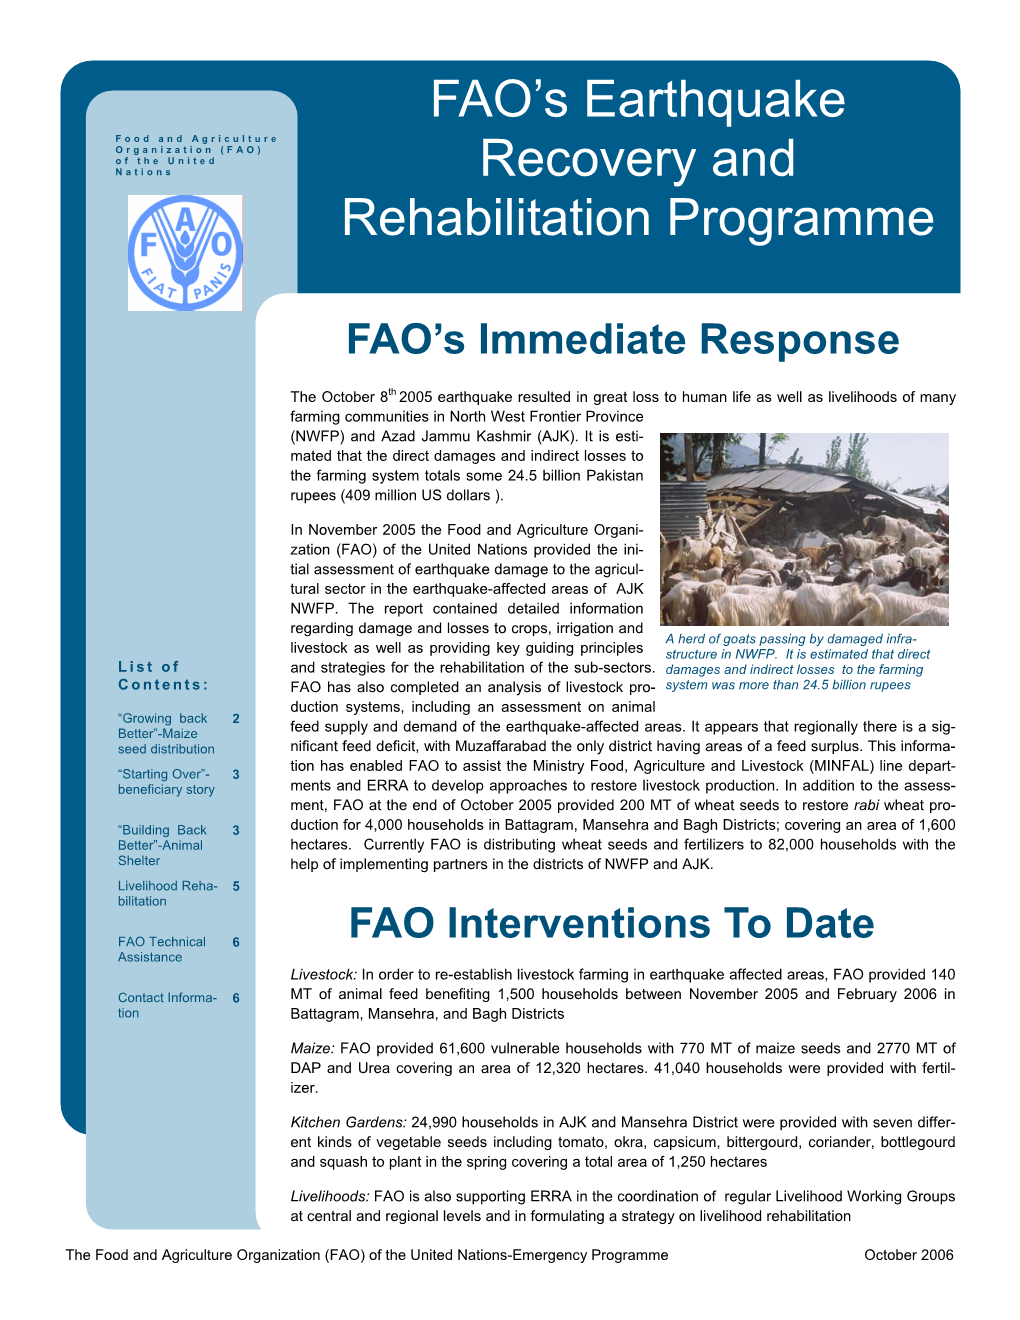 FAO's Earthquake Recovery and Rehabilitation Programme